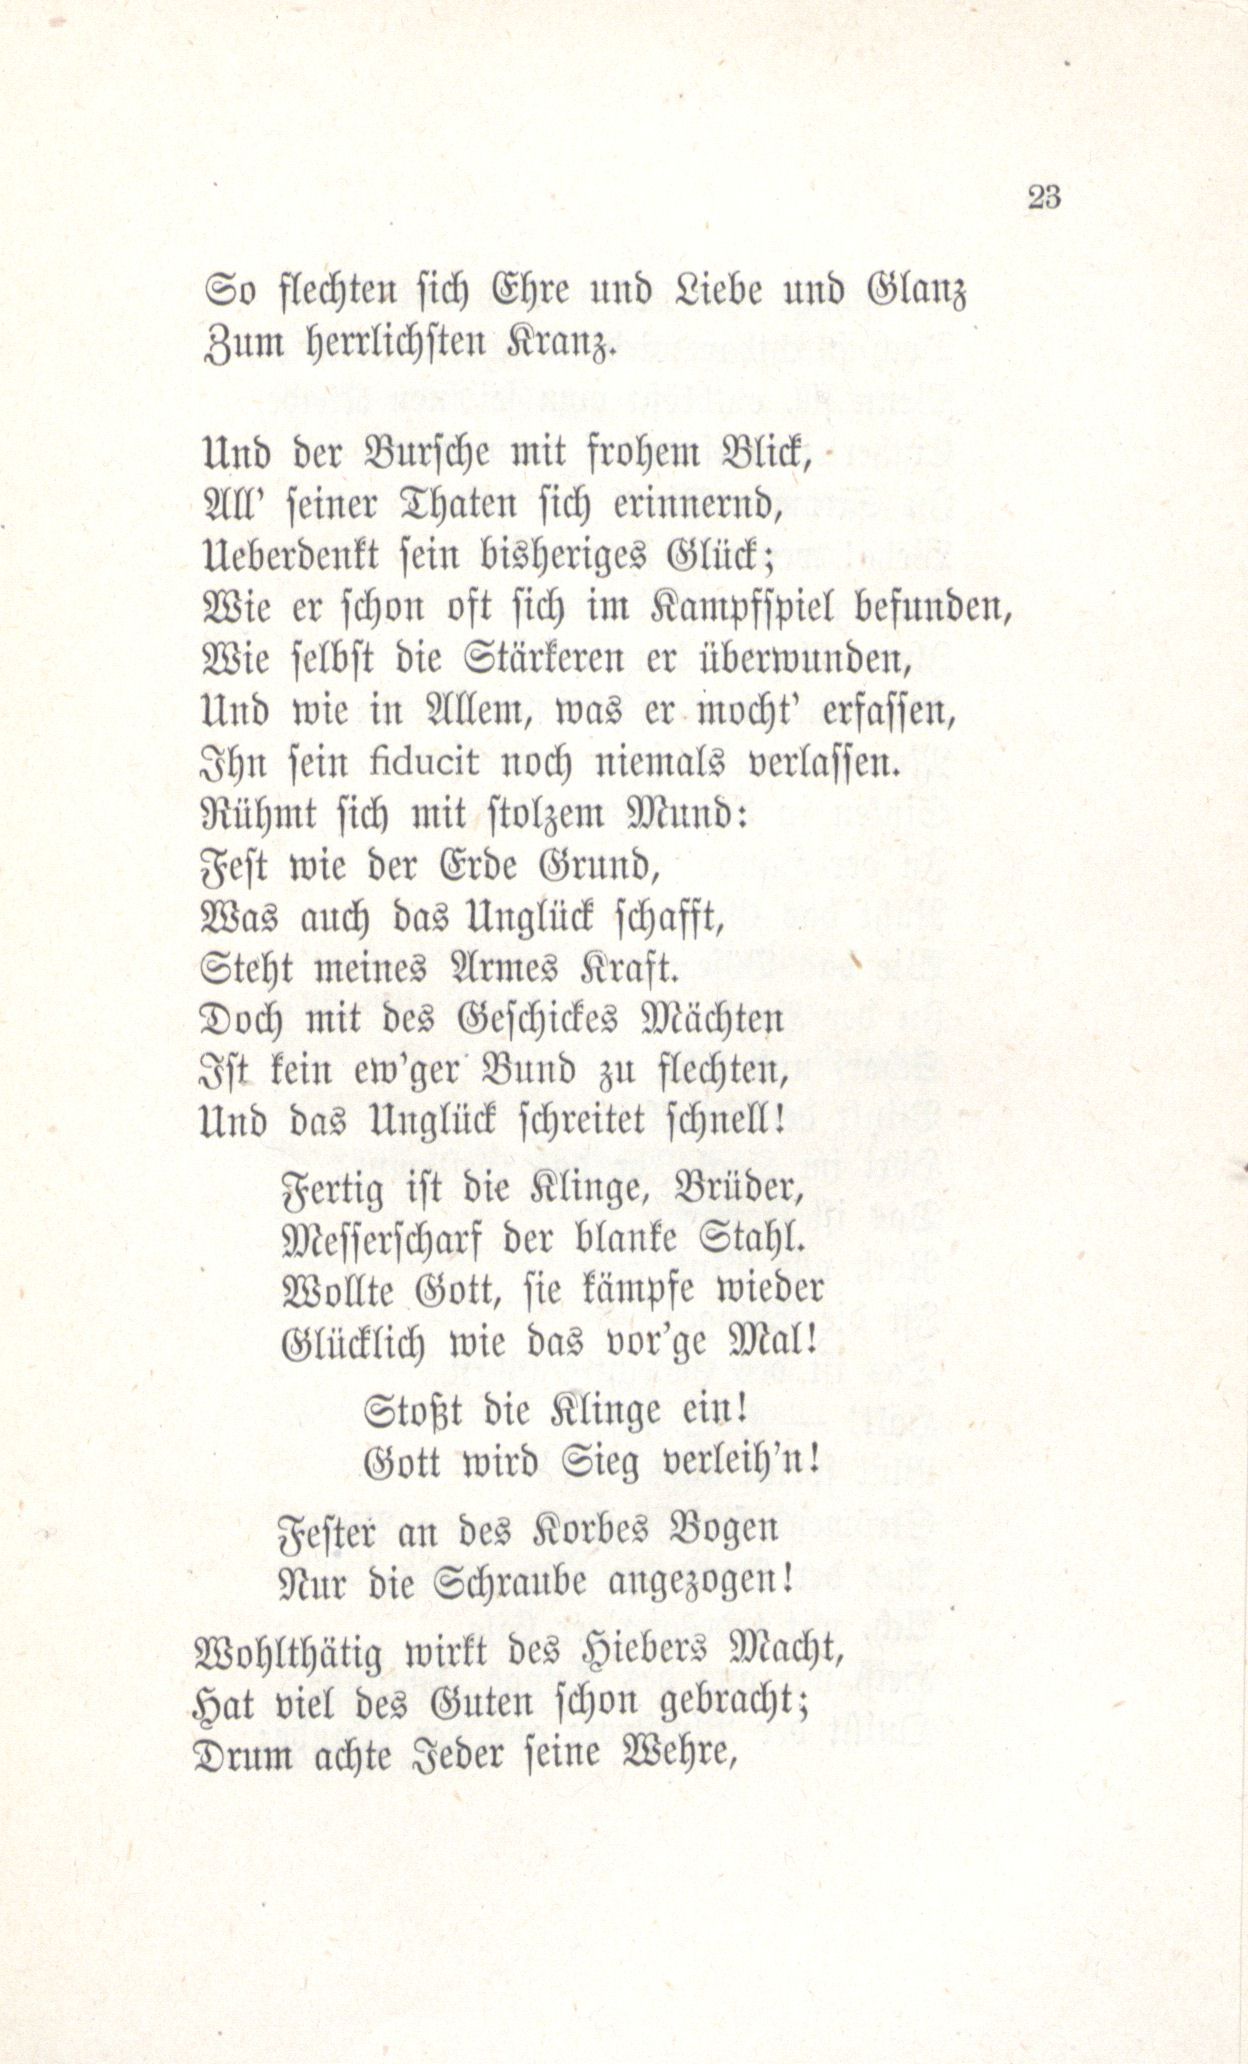 Erinnerung an die Fraternitas (1880) | 24. (23) Main body of text